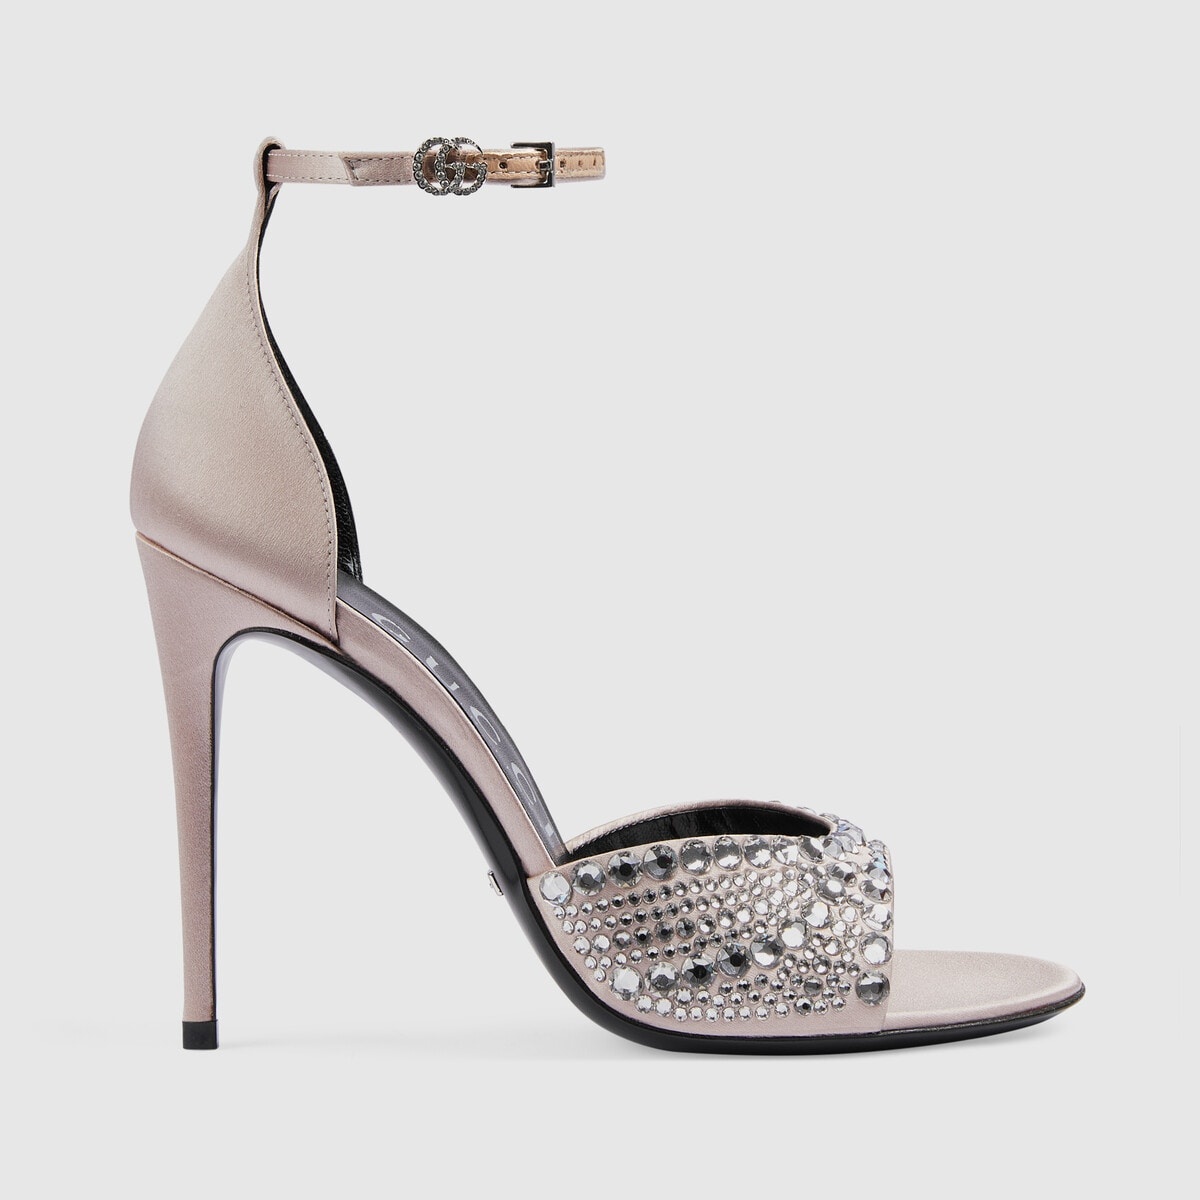 Women's high heel sandals with crystals - 1